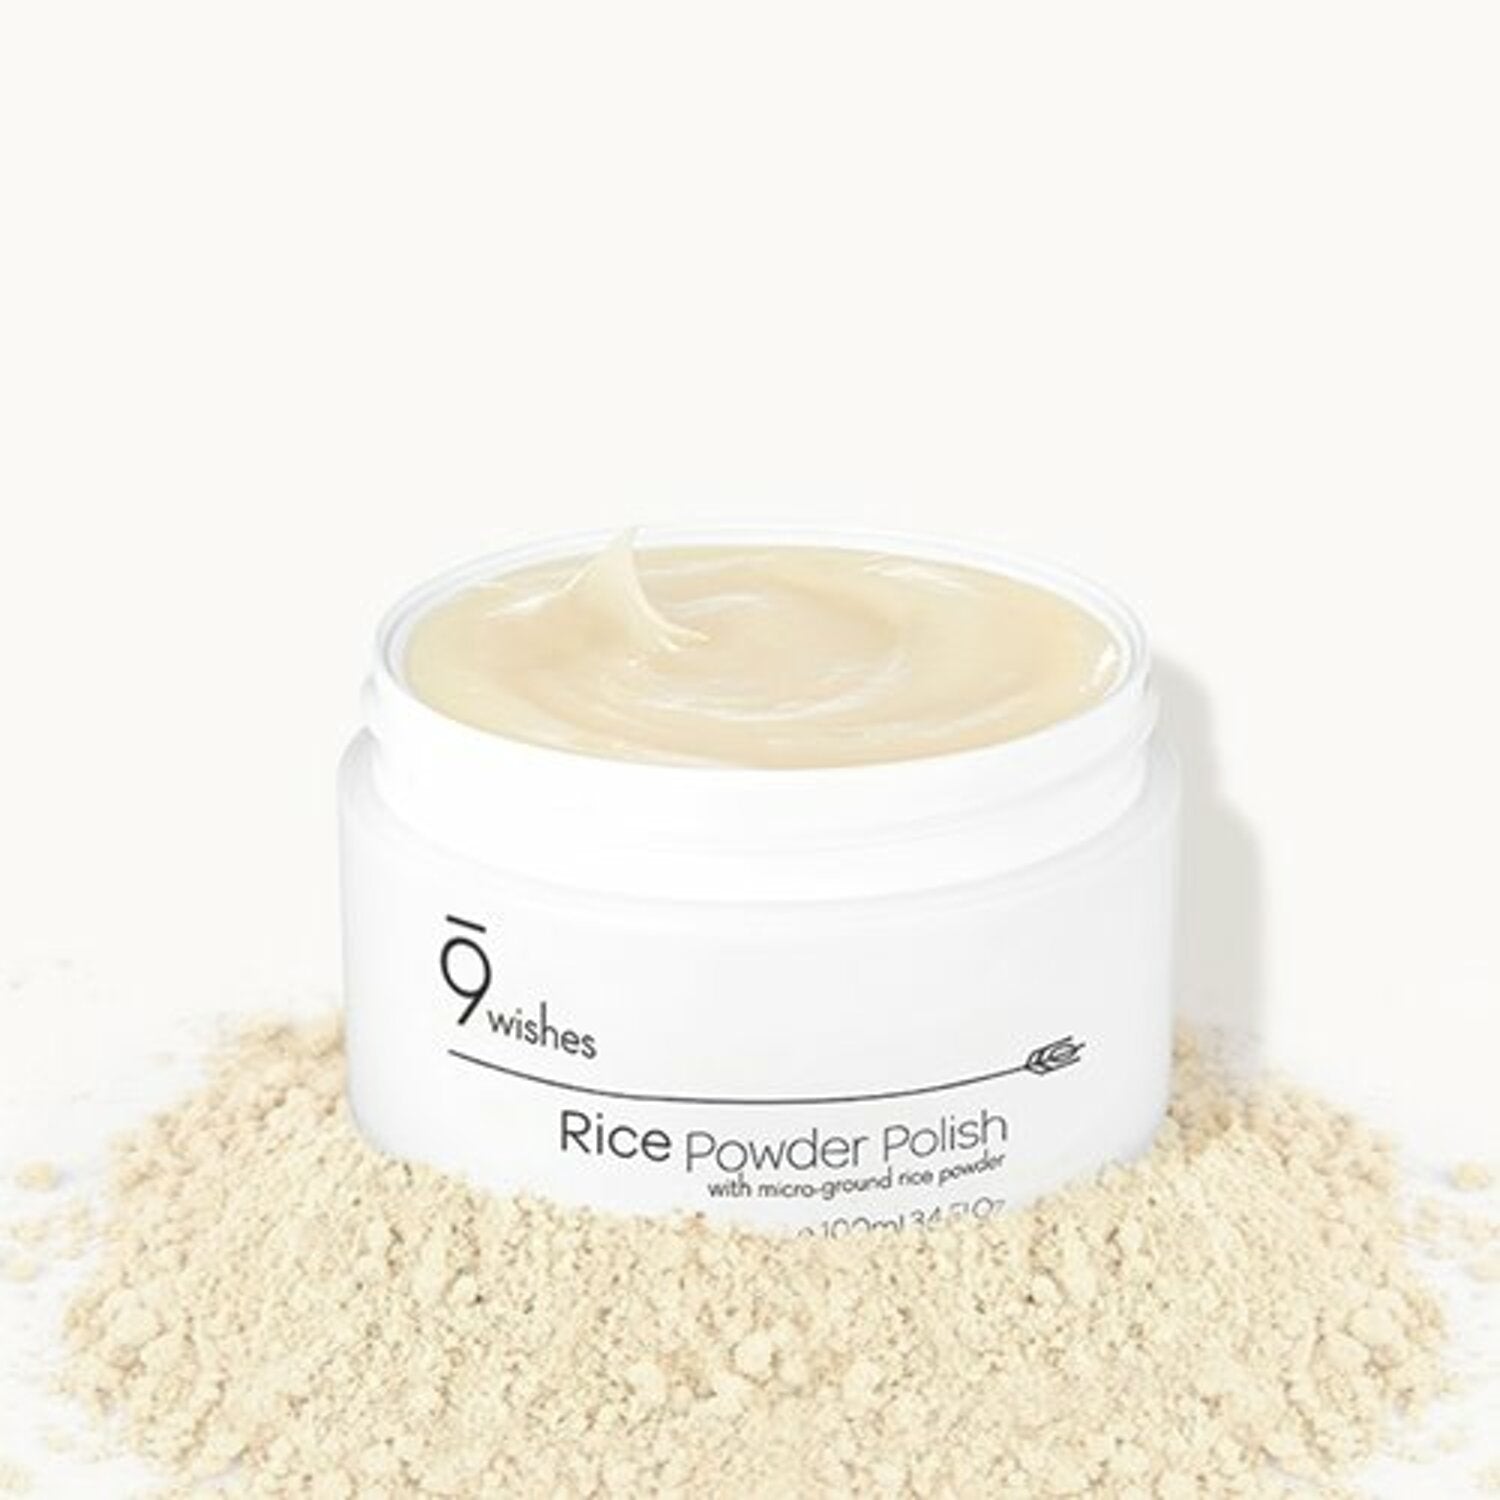 9wishes Rice Powder Polish 100ml - DODOSKIN